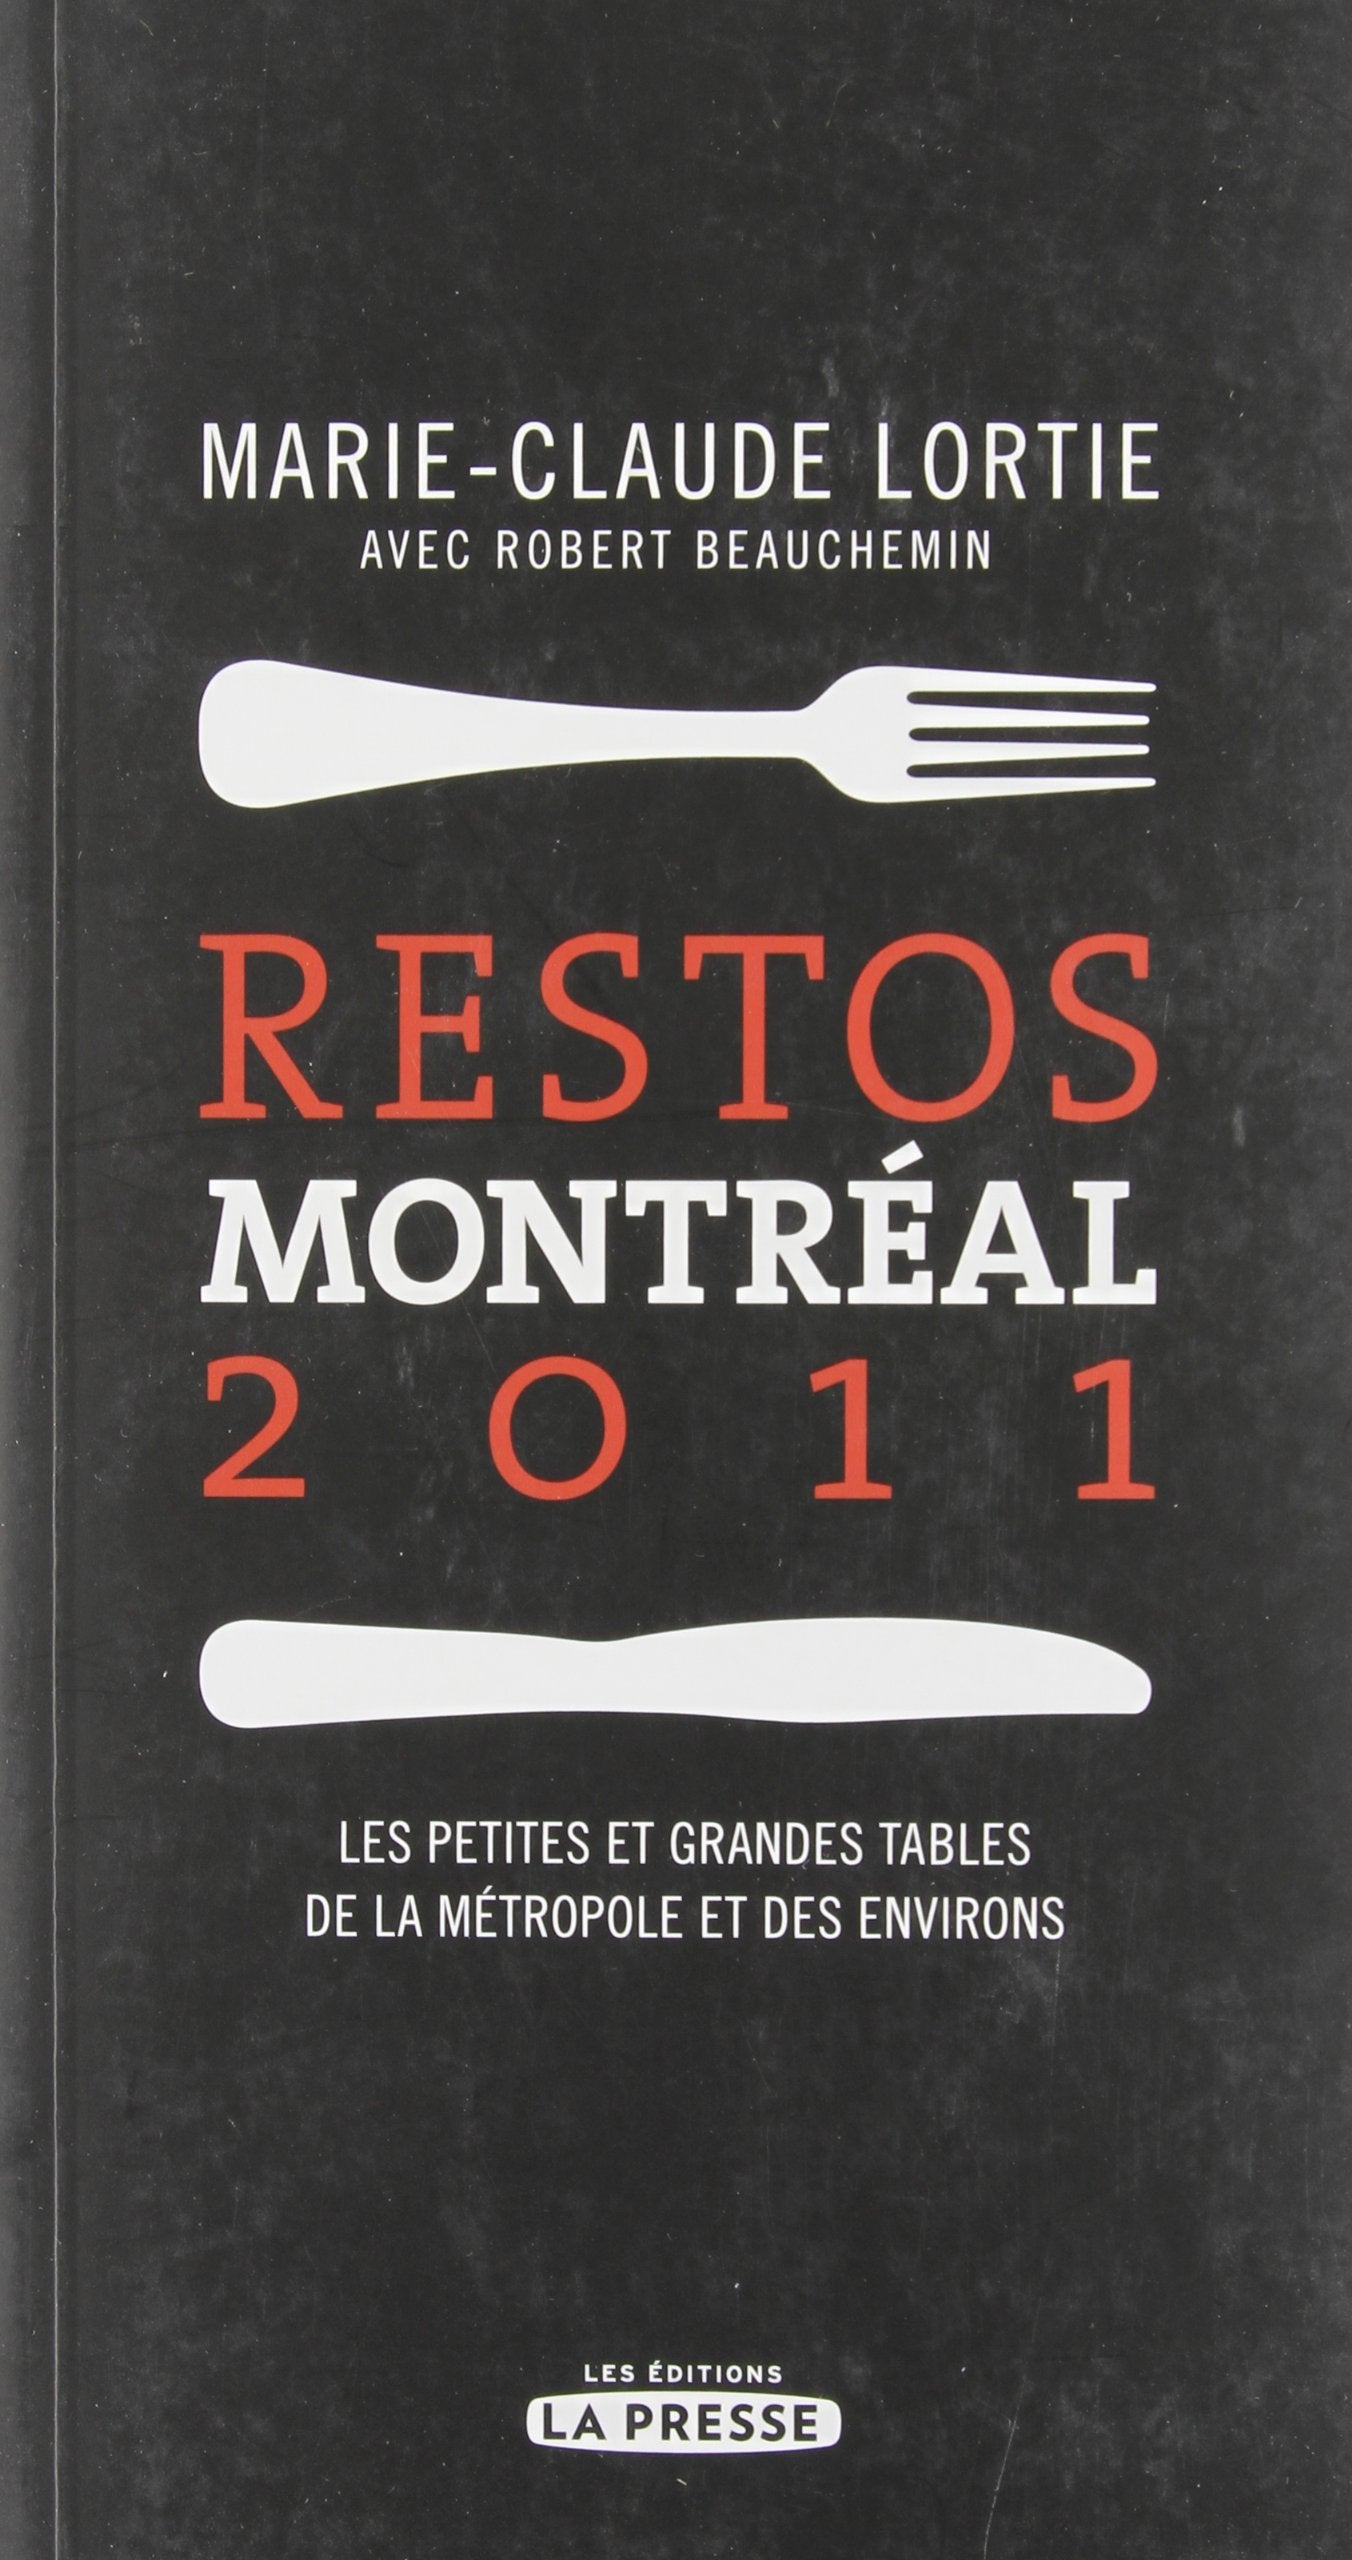 Livre ISBN 2923681428 Restos Montréal 2011 (Marie-Claude Lortie)